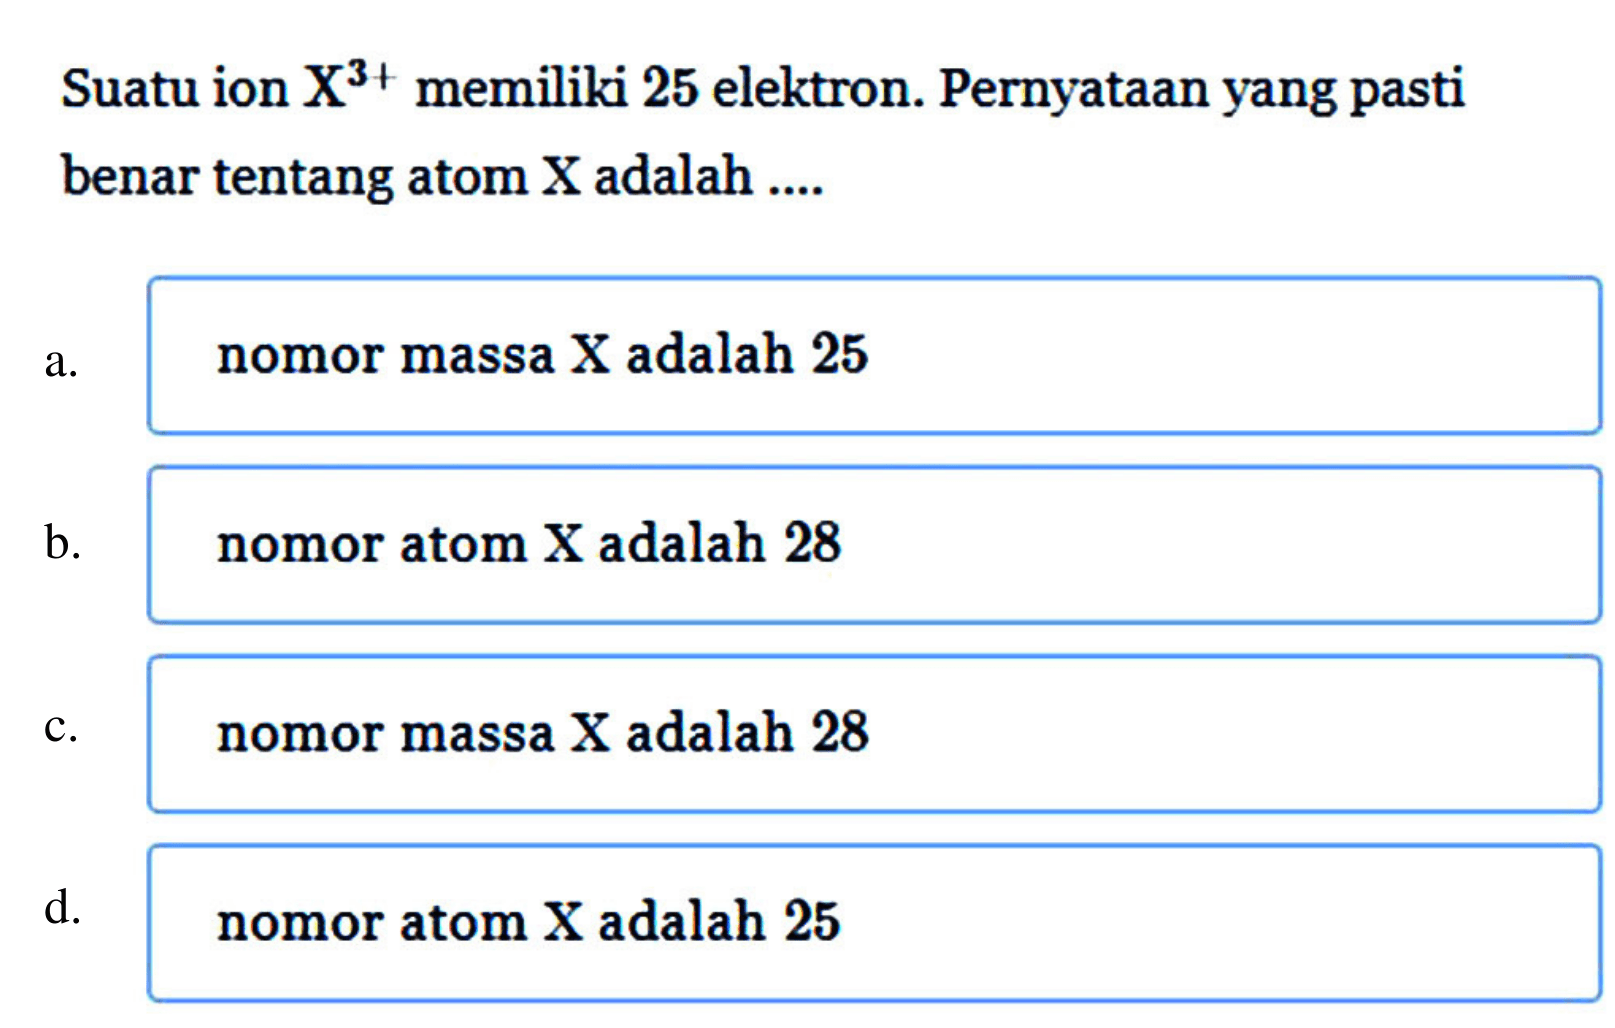 Suatu ion X^(3+) memiliki 25 elektron. Pernyataan yang pasti benar tentang atom X adalah .... a. nomor massa X adalah 25
b. nomor atom X adalah 28
c. nomor massa X adalah 28
d. nomor atom X adalah 25